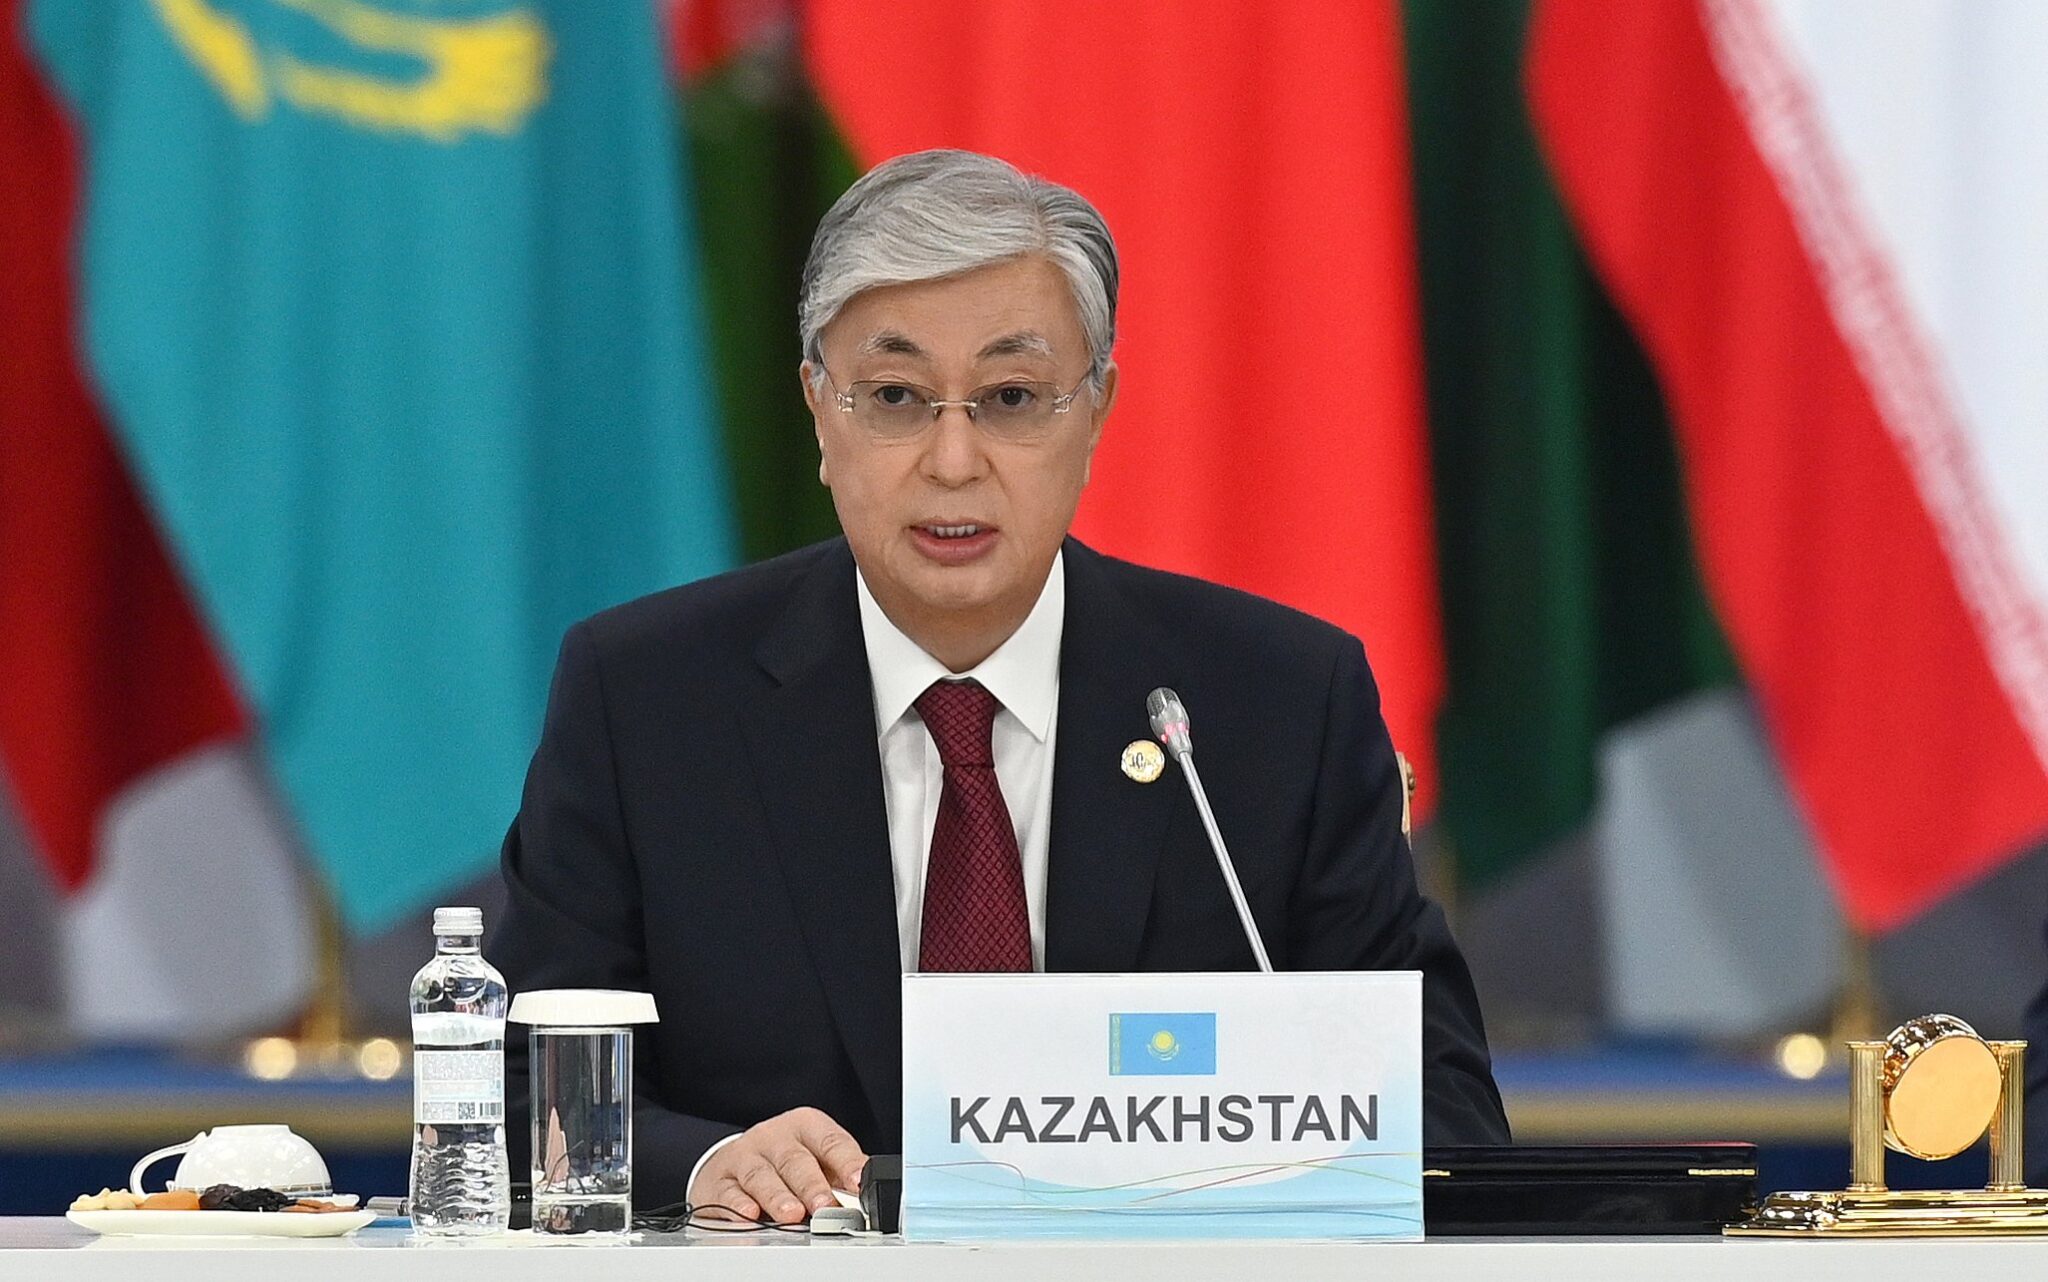 President of Kazakhstan Kassym-Jomart Tokayev. Photo: Sputnik/Press Service of the President of Kazakhstan.